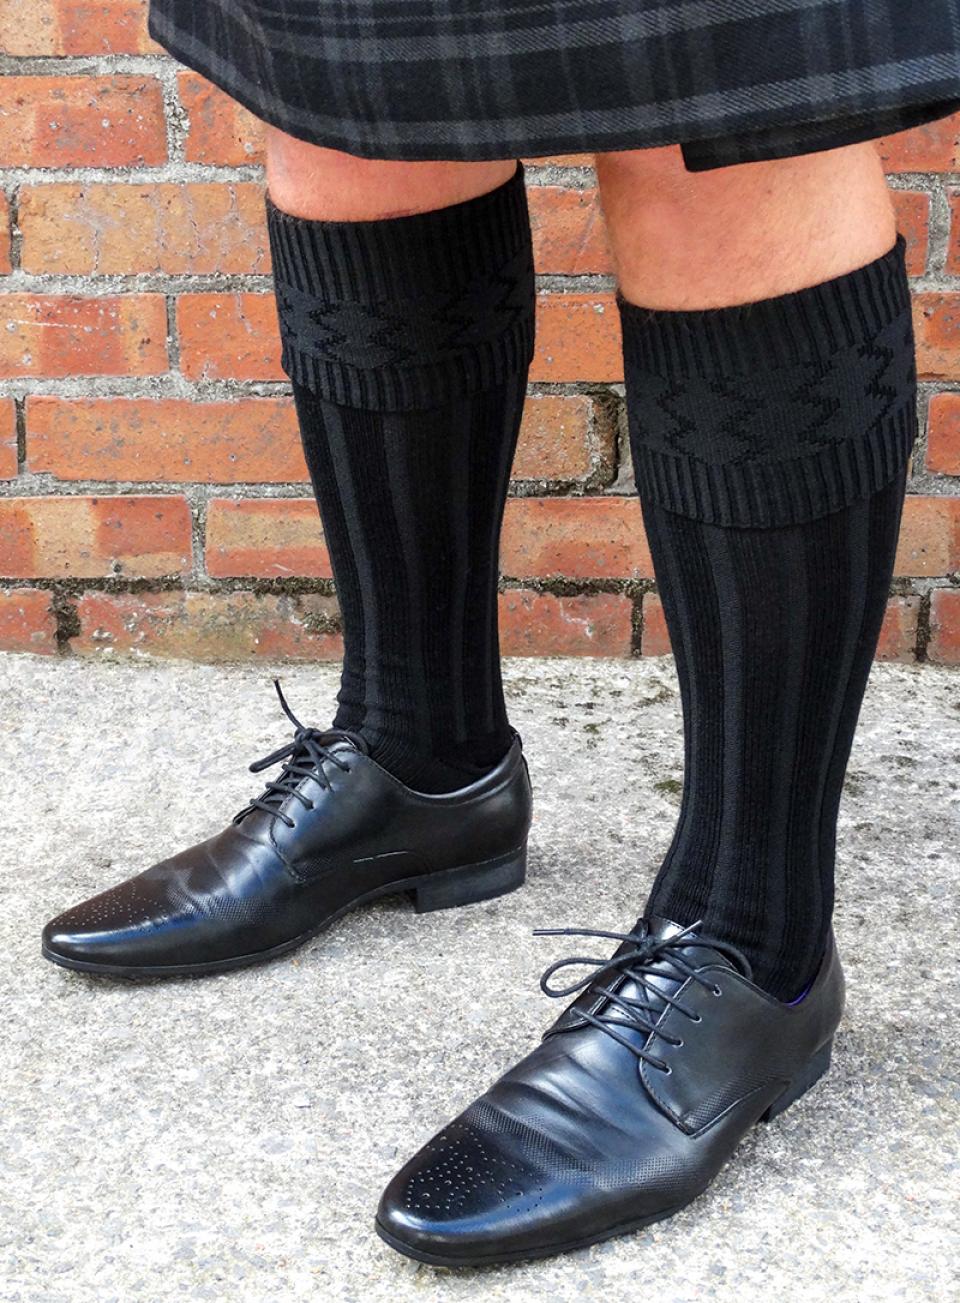 Black Kilt Hose (Socks)